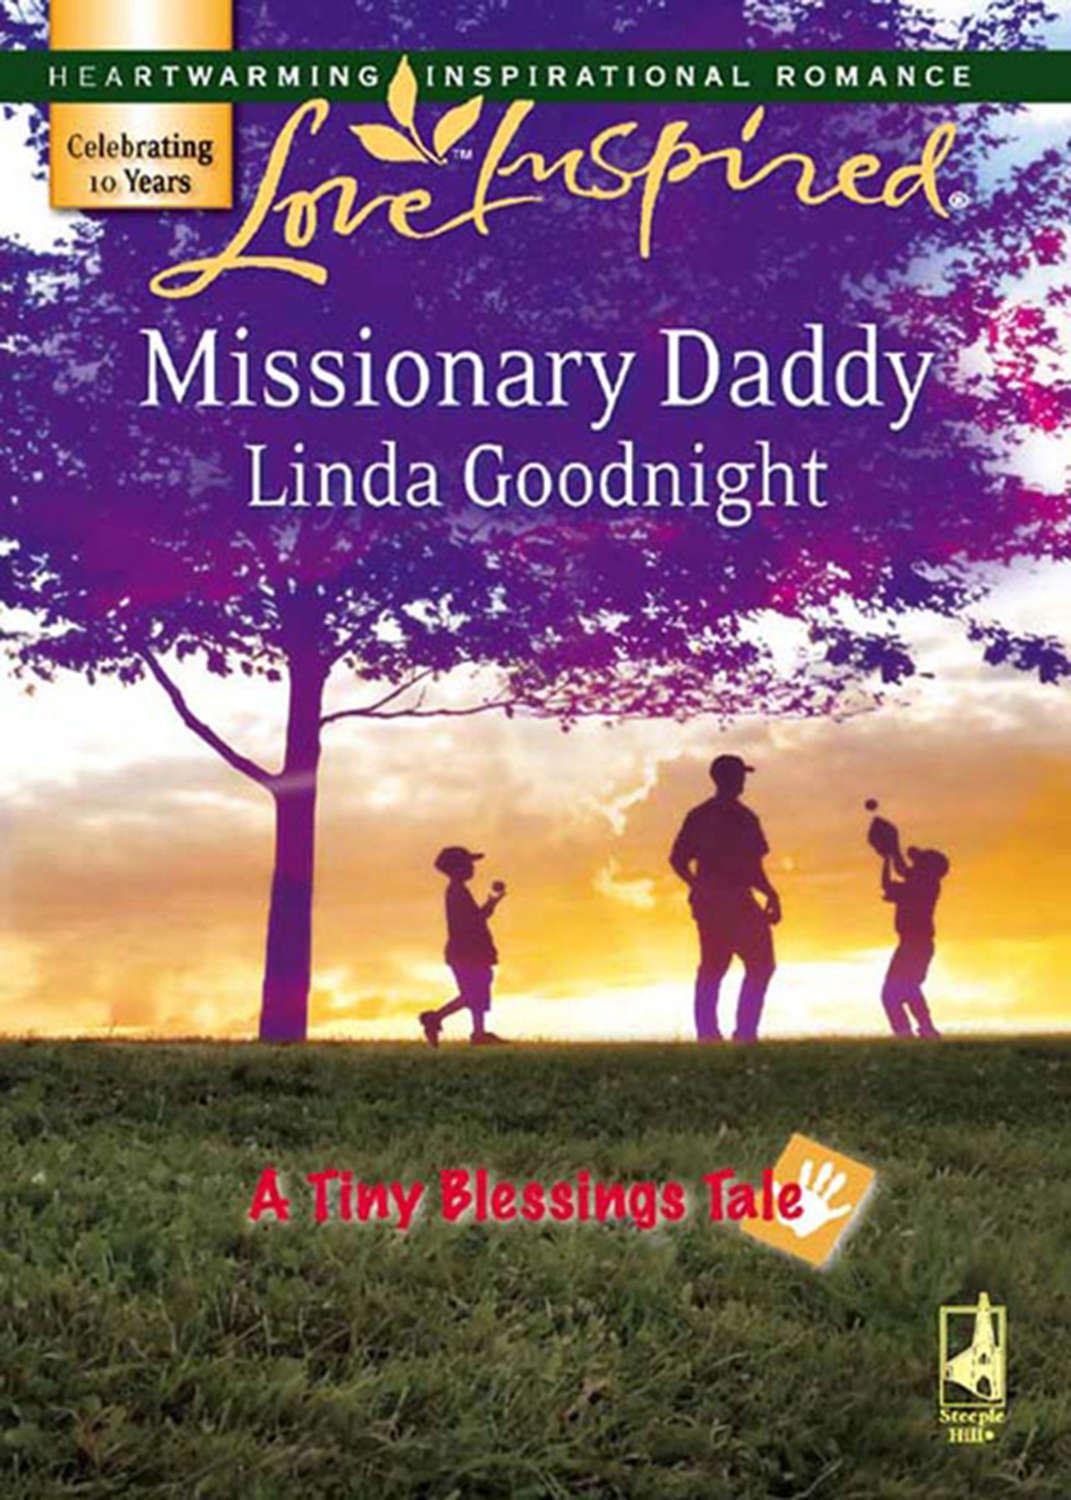 Missionary dad